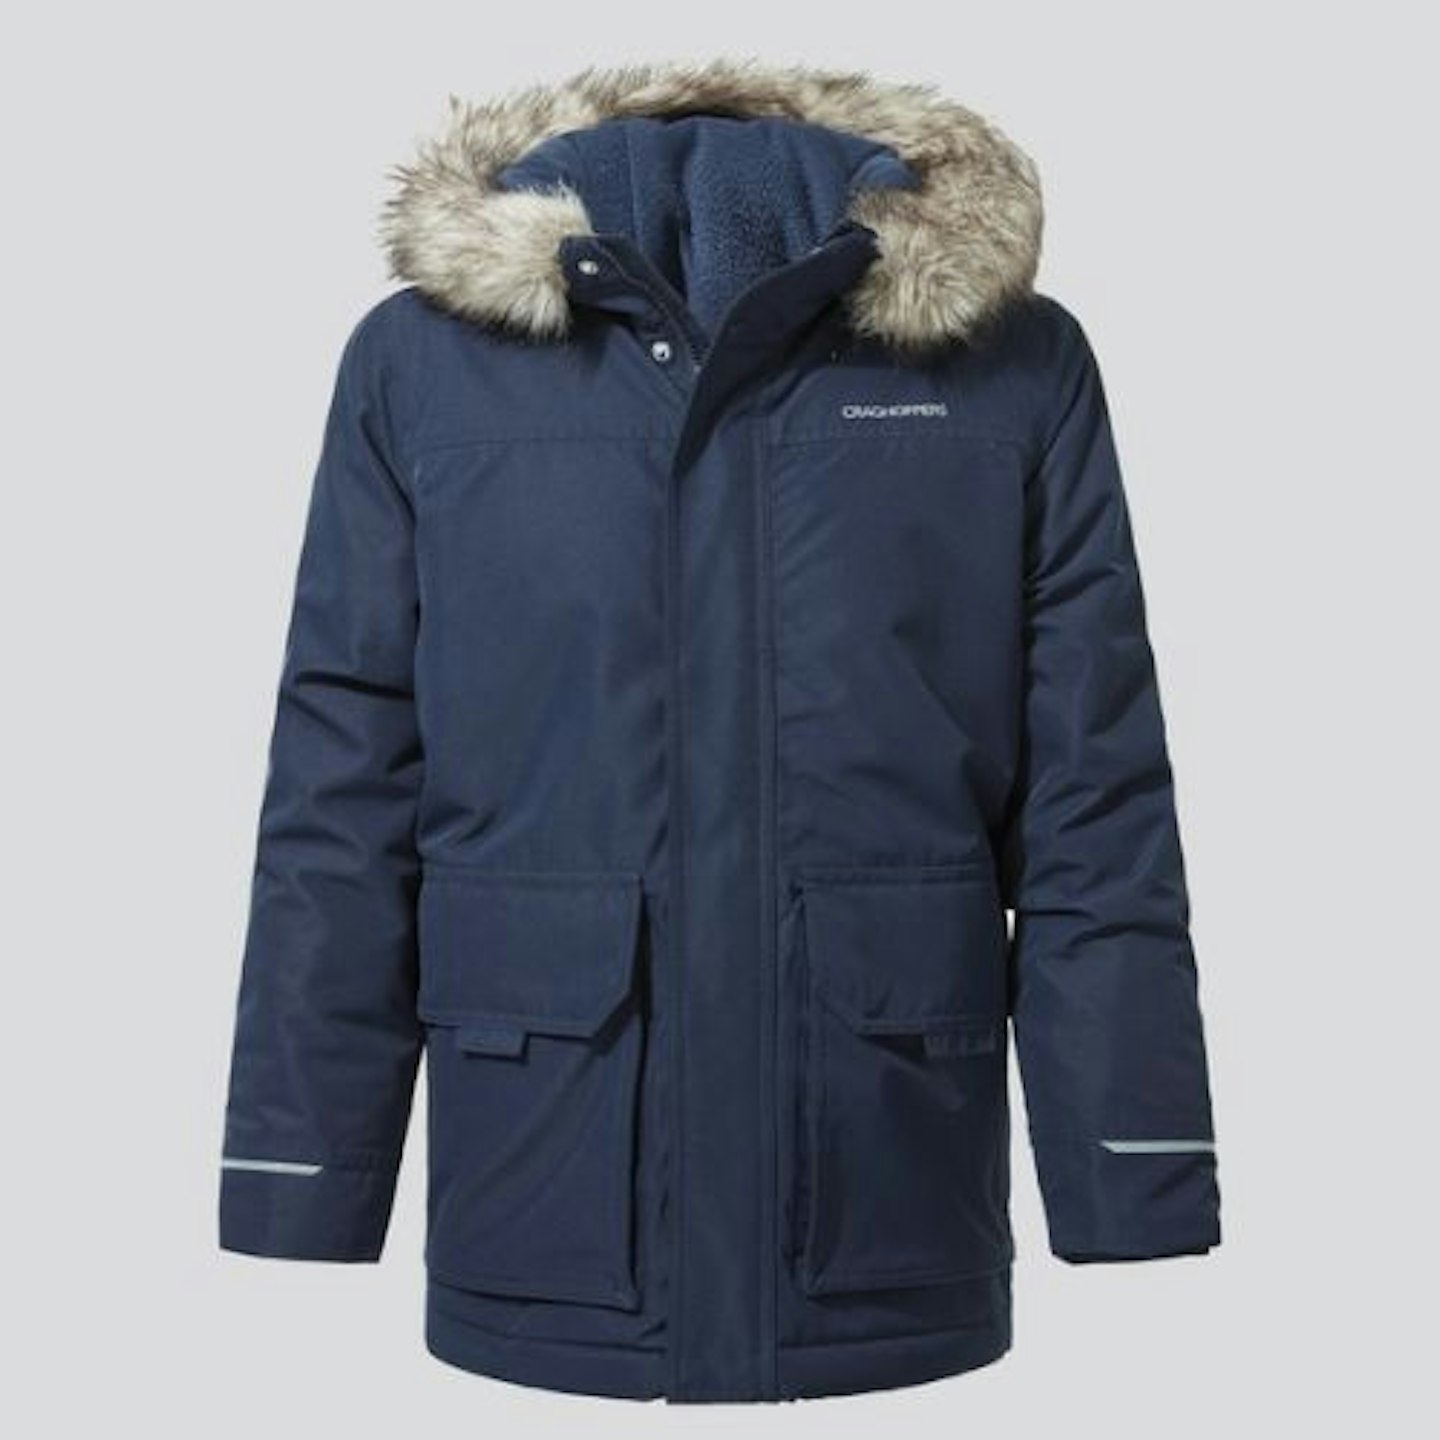 Best toddler winter coats Kid's Corrib Jacket Blue Navy